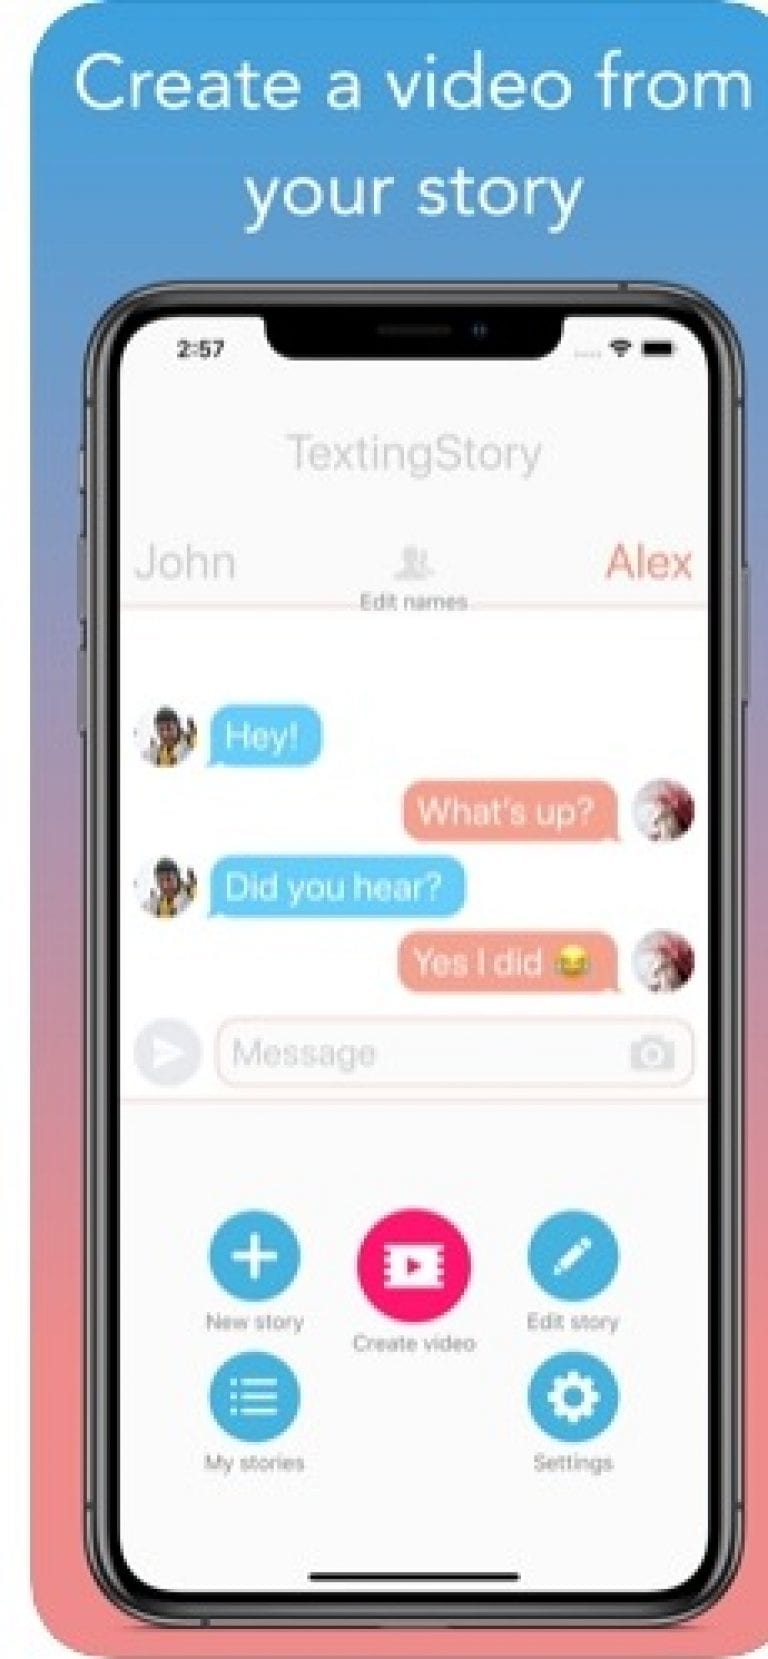 Best text messaging apps android - stepskop